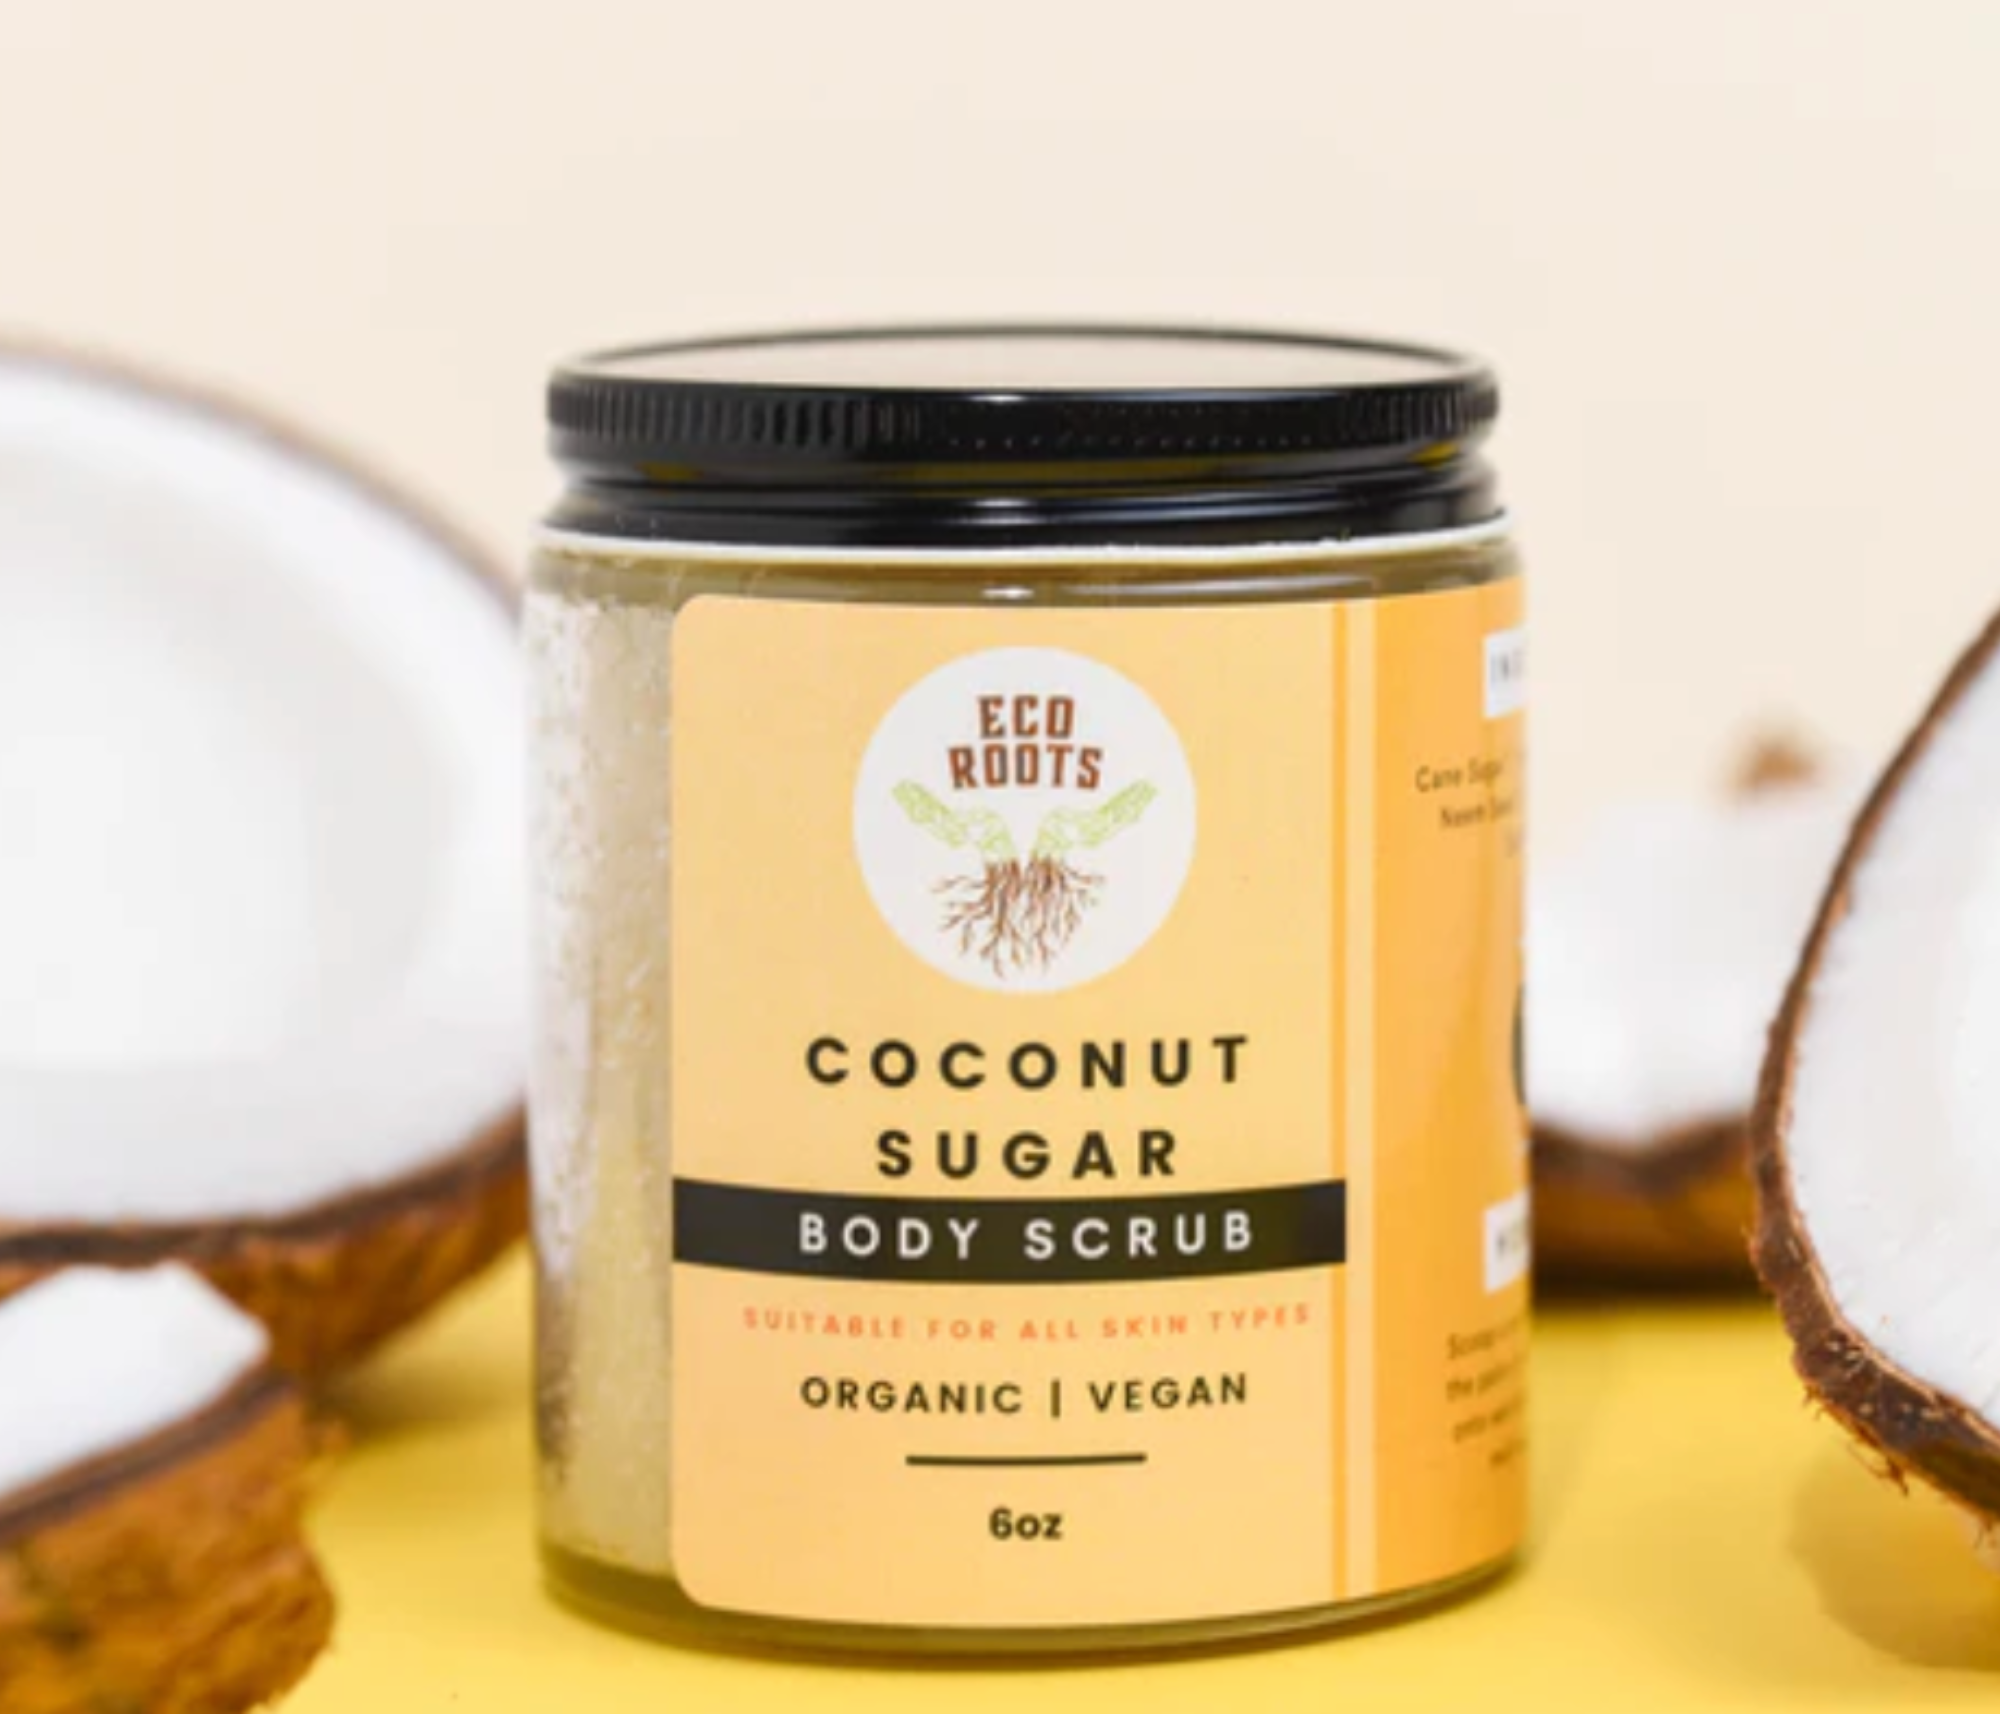 ecoroots coconut sugar body scrub